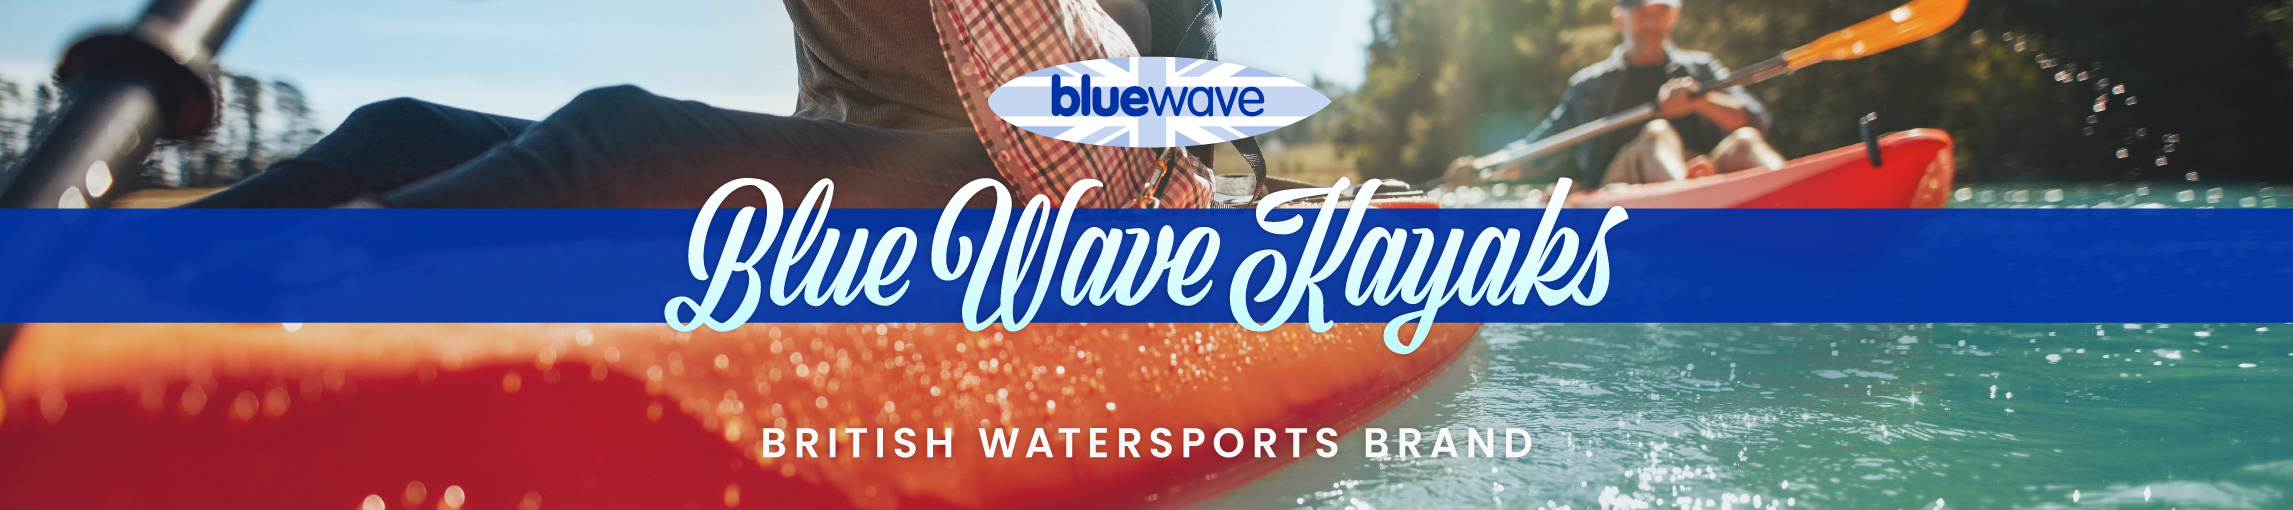 bluewave kayaks beach header